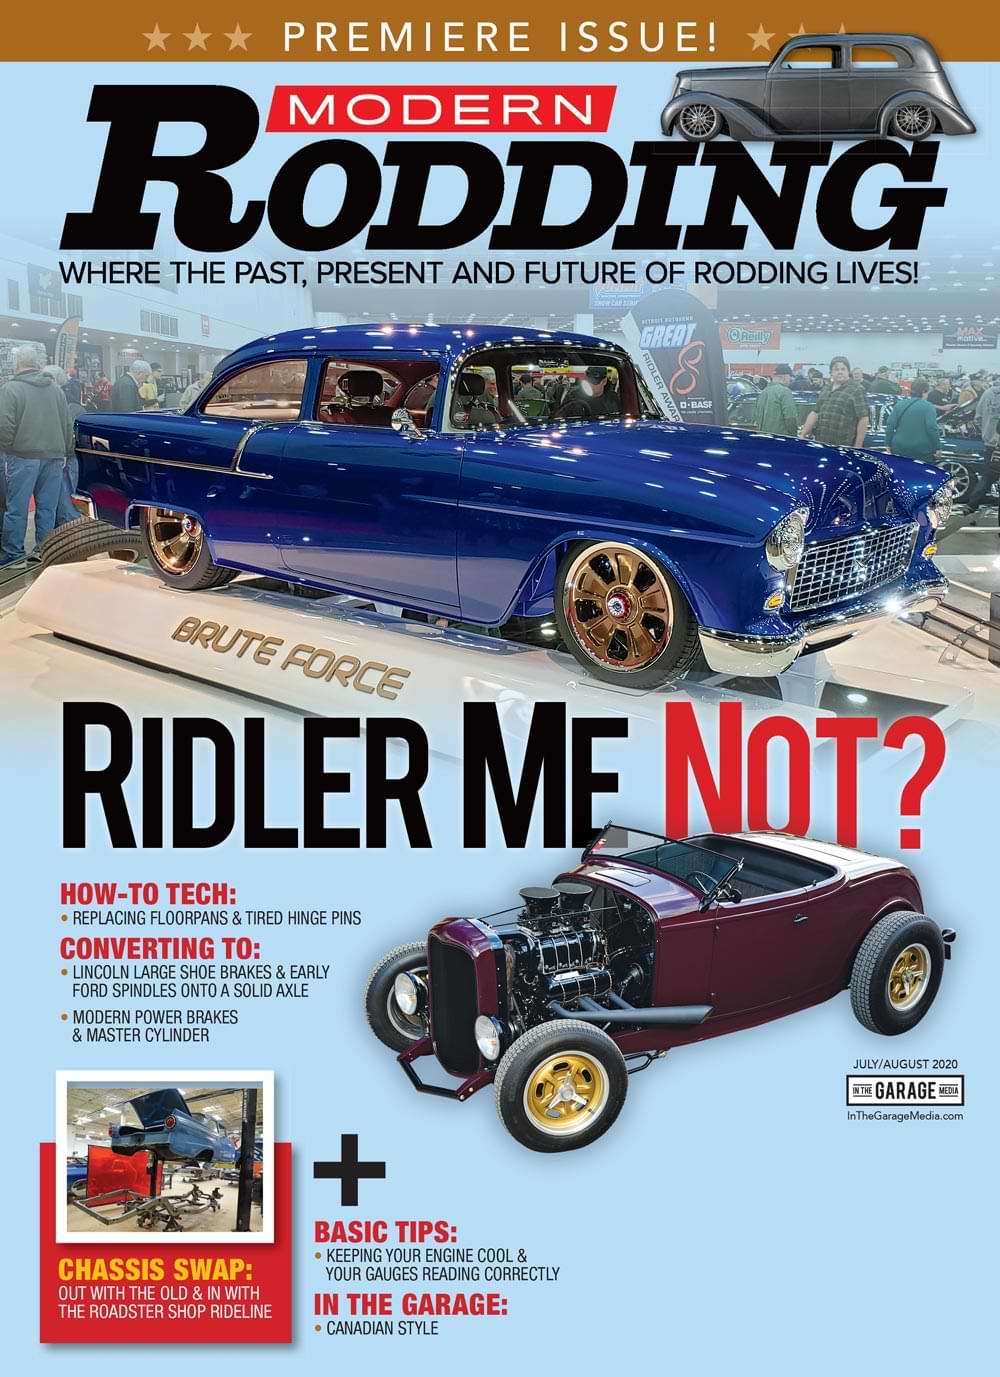 Modern Rodding Premiere Issue cover